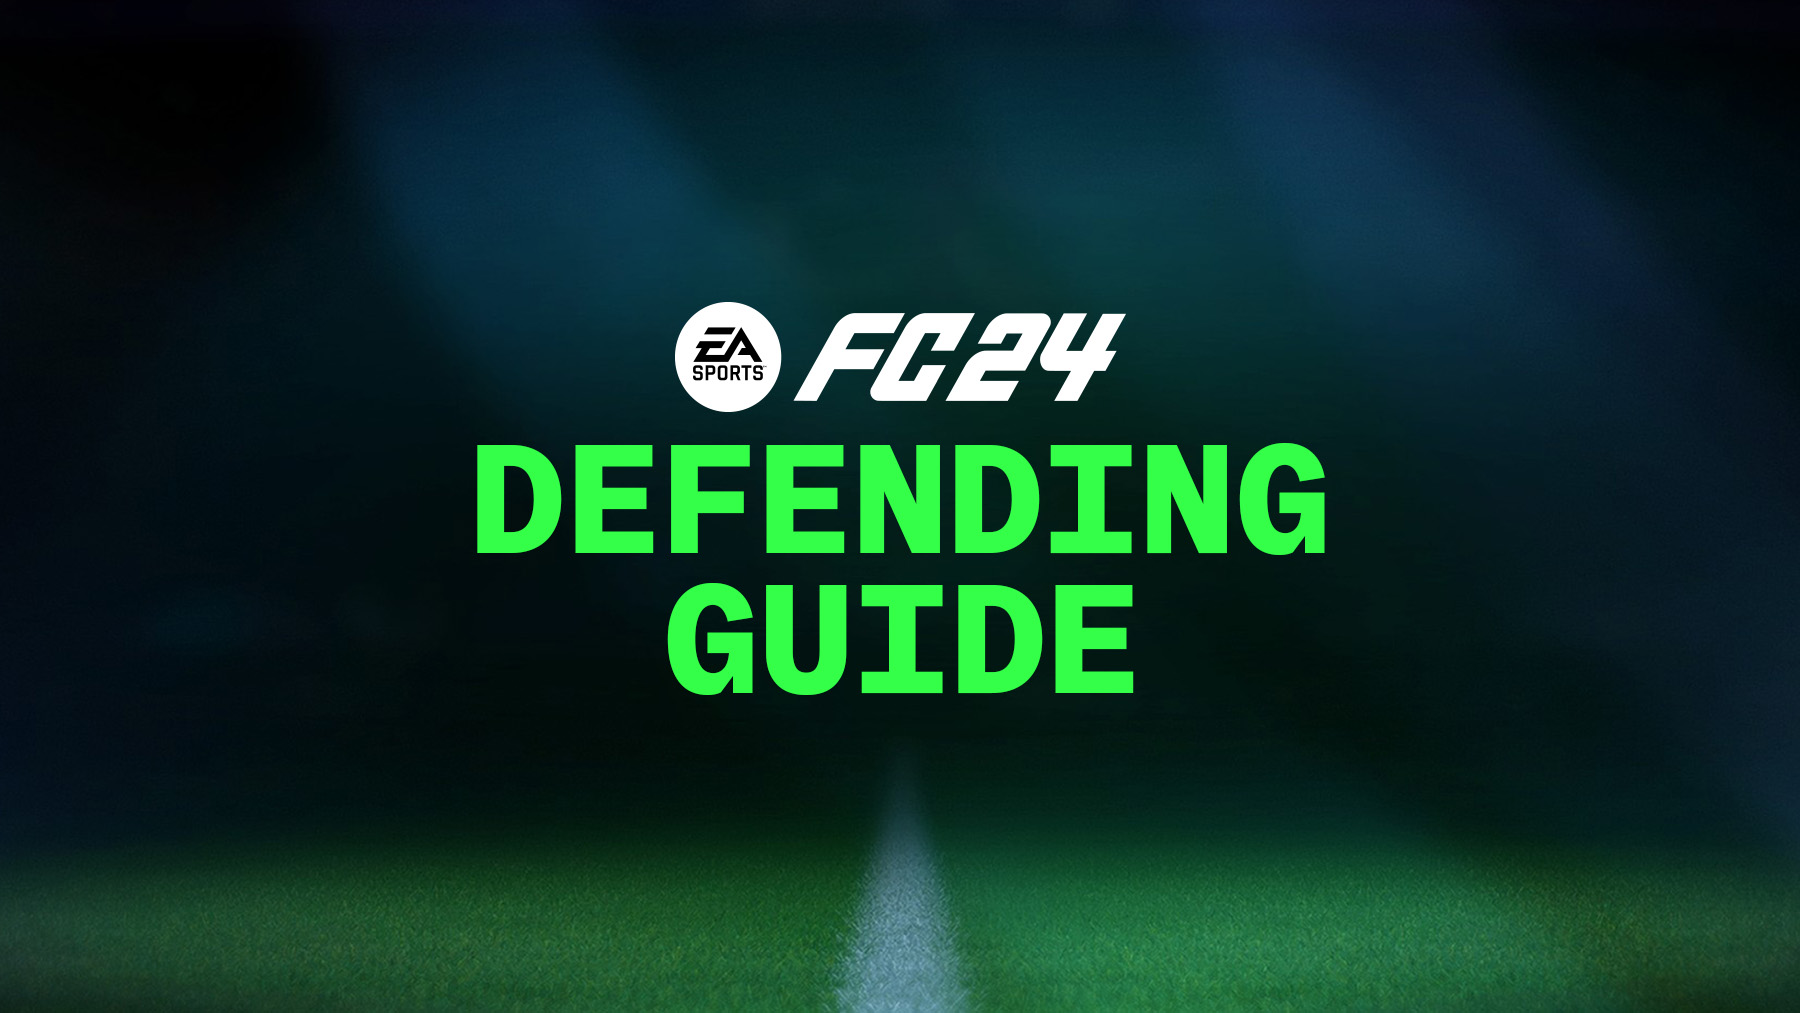 EA SPORTS FC 24 – FIFPlay